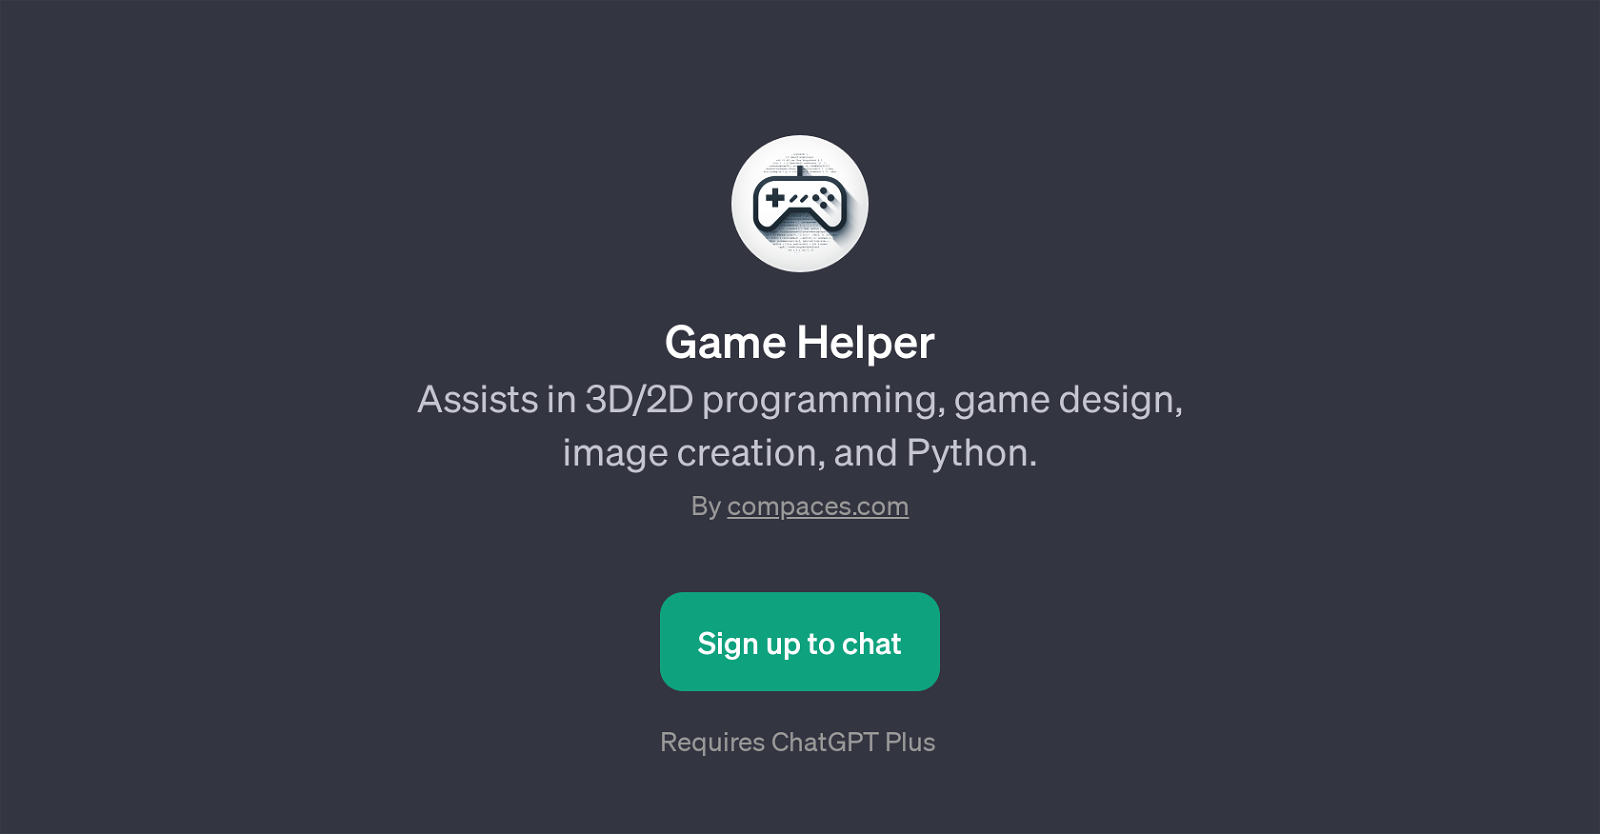 Game Helper website